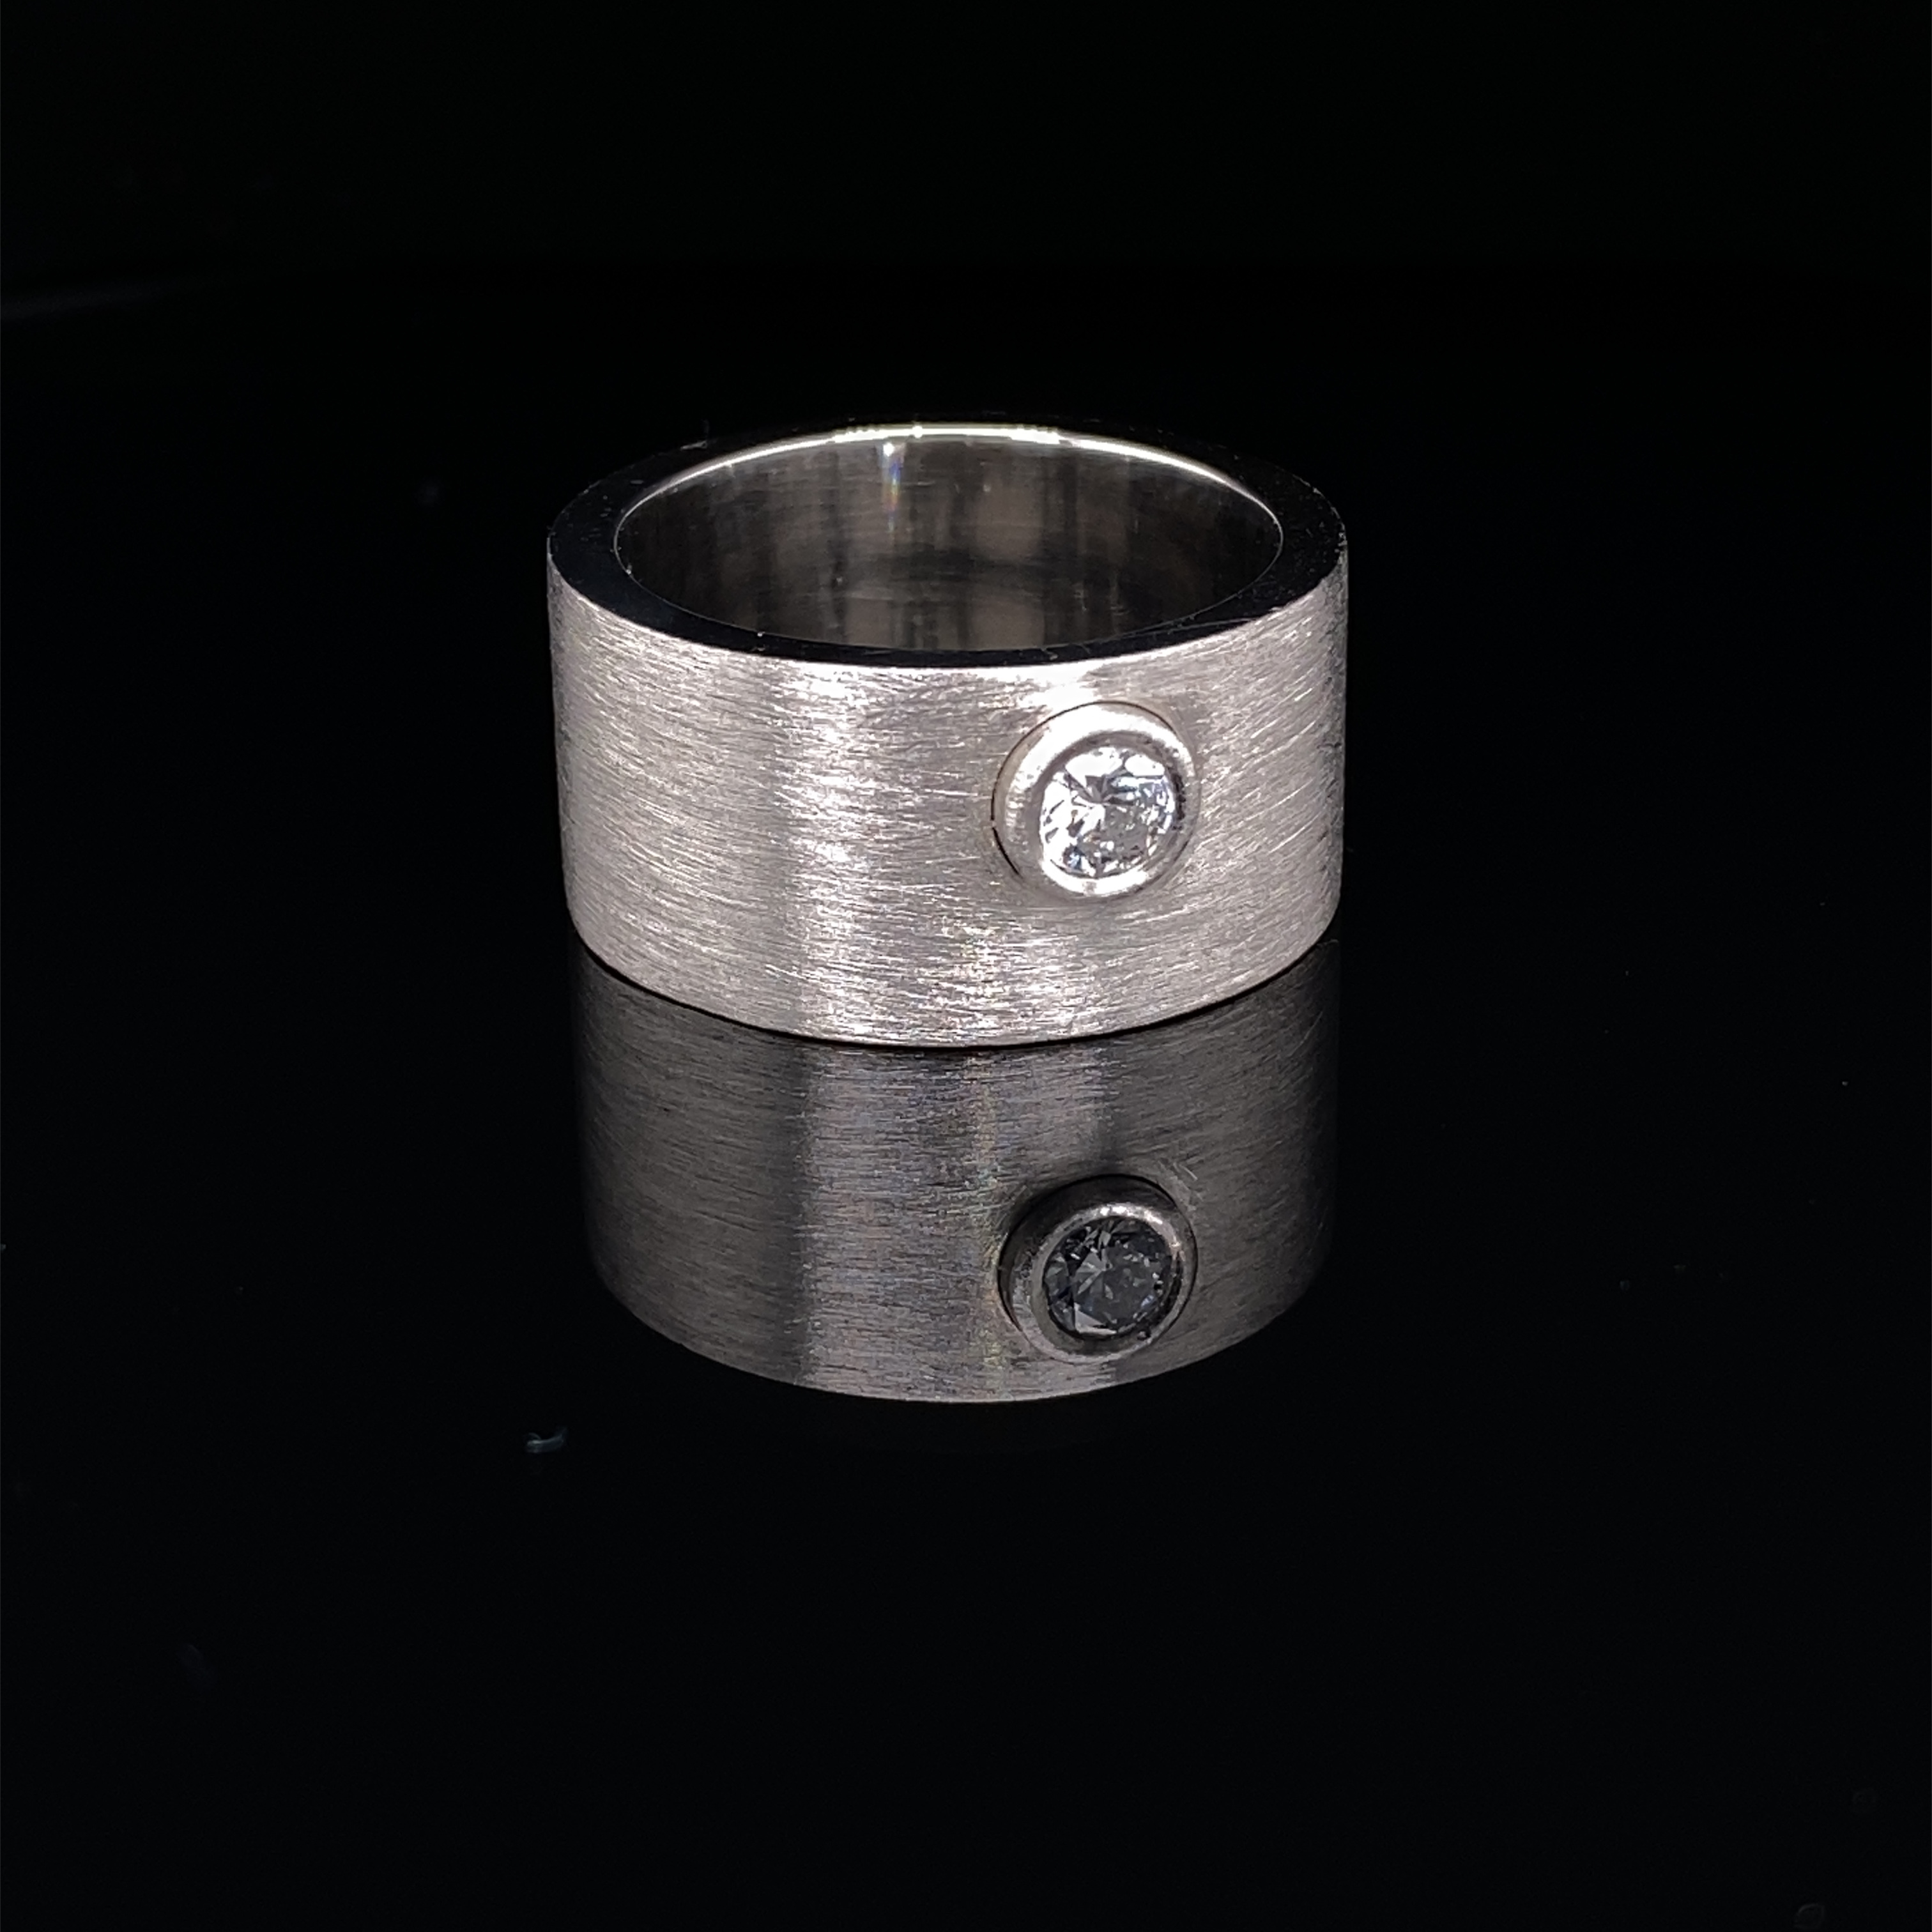 Handmade Platinum ring 9t950 with diamond